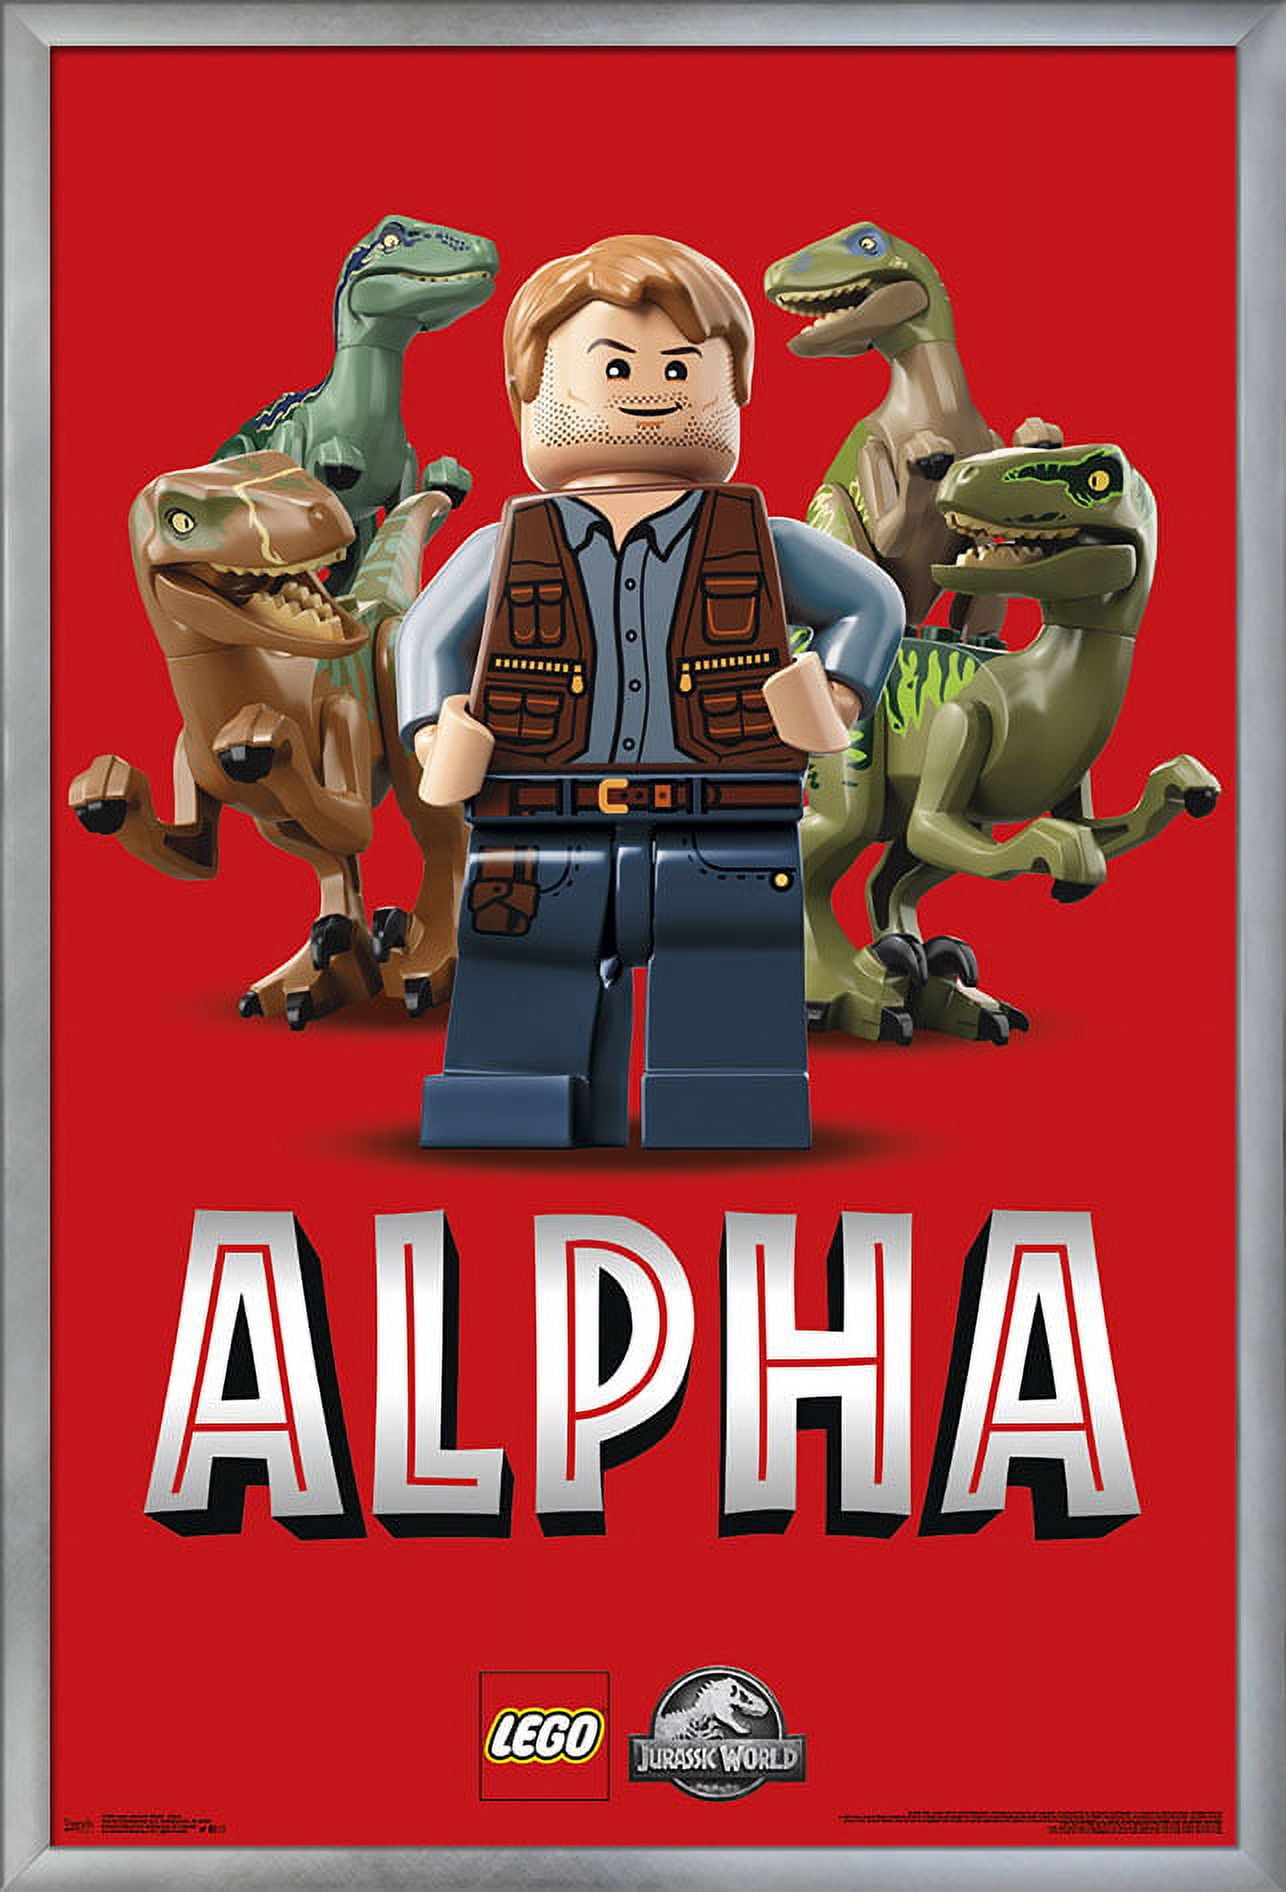 LEGO Jurassic World - The Alpha - Free Play (1080p60fps) 